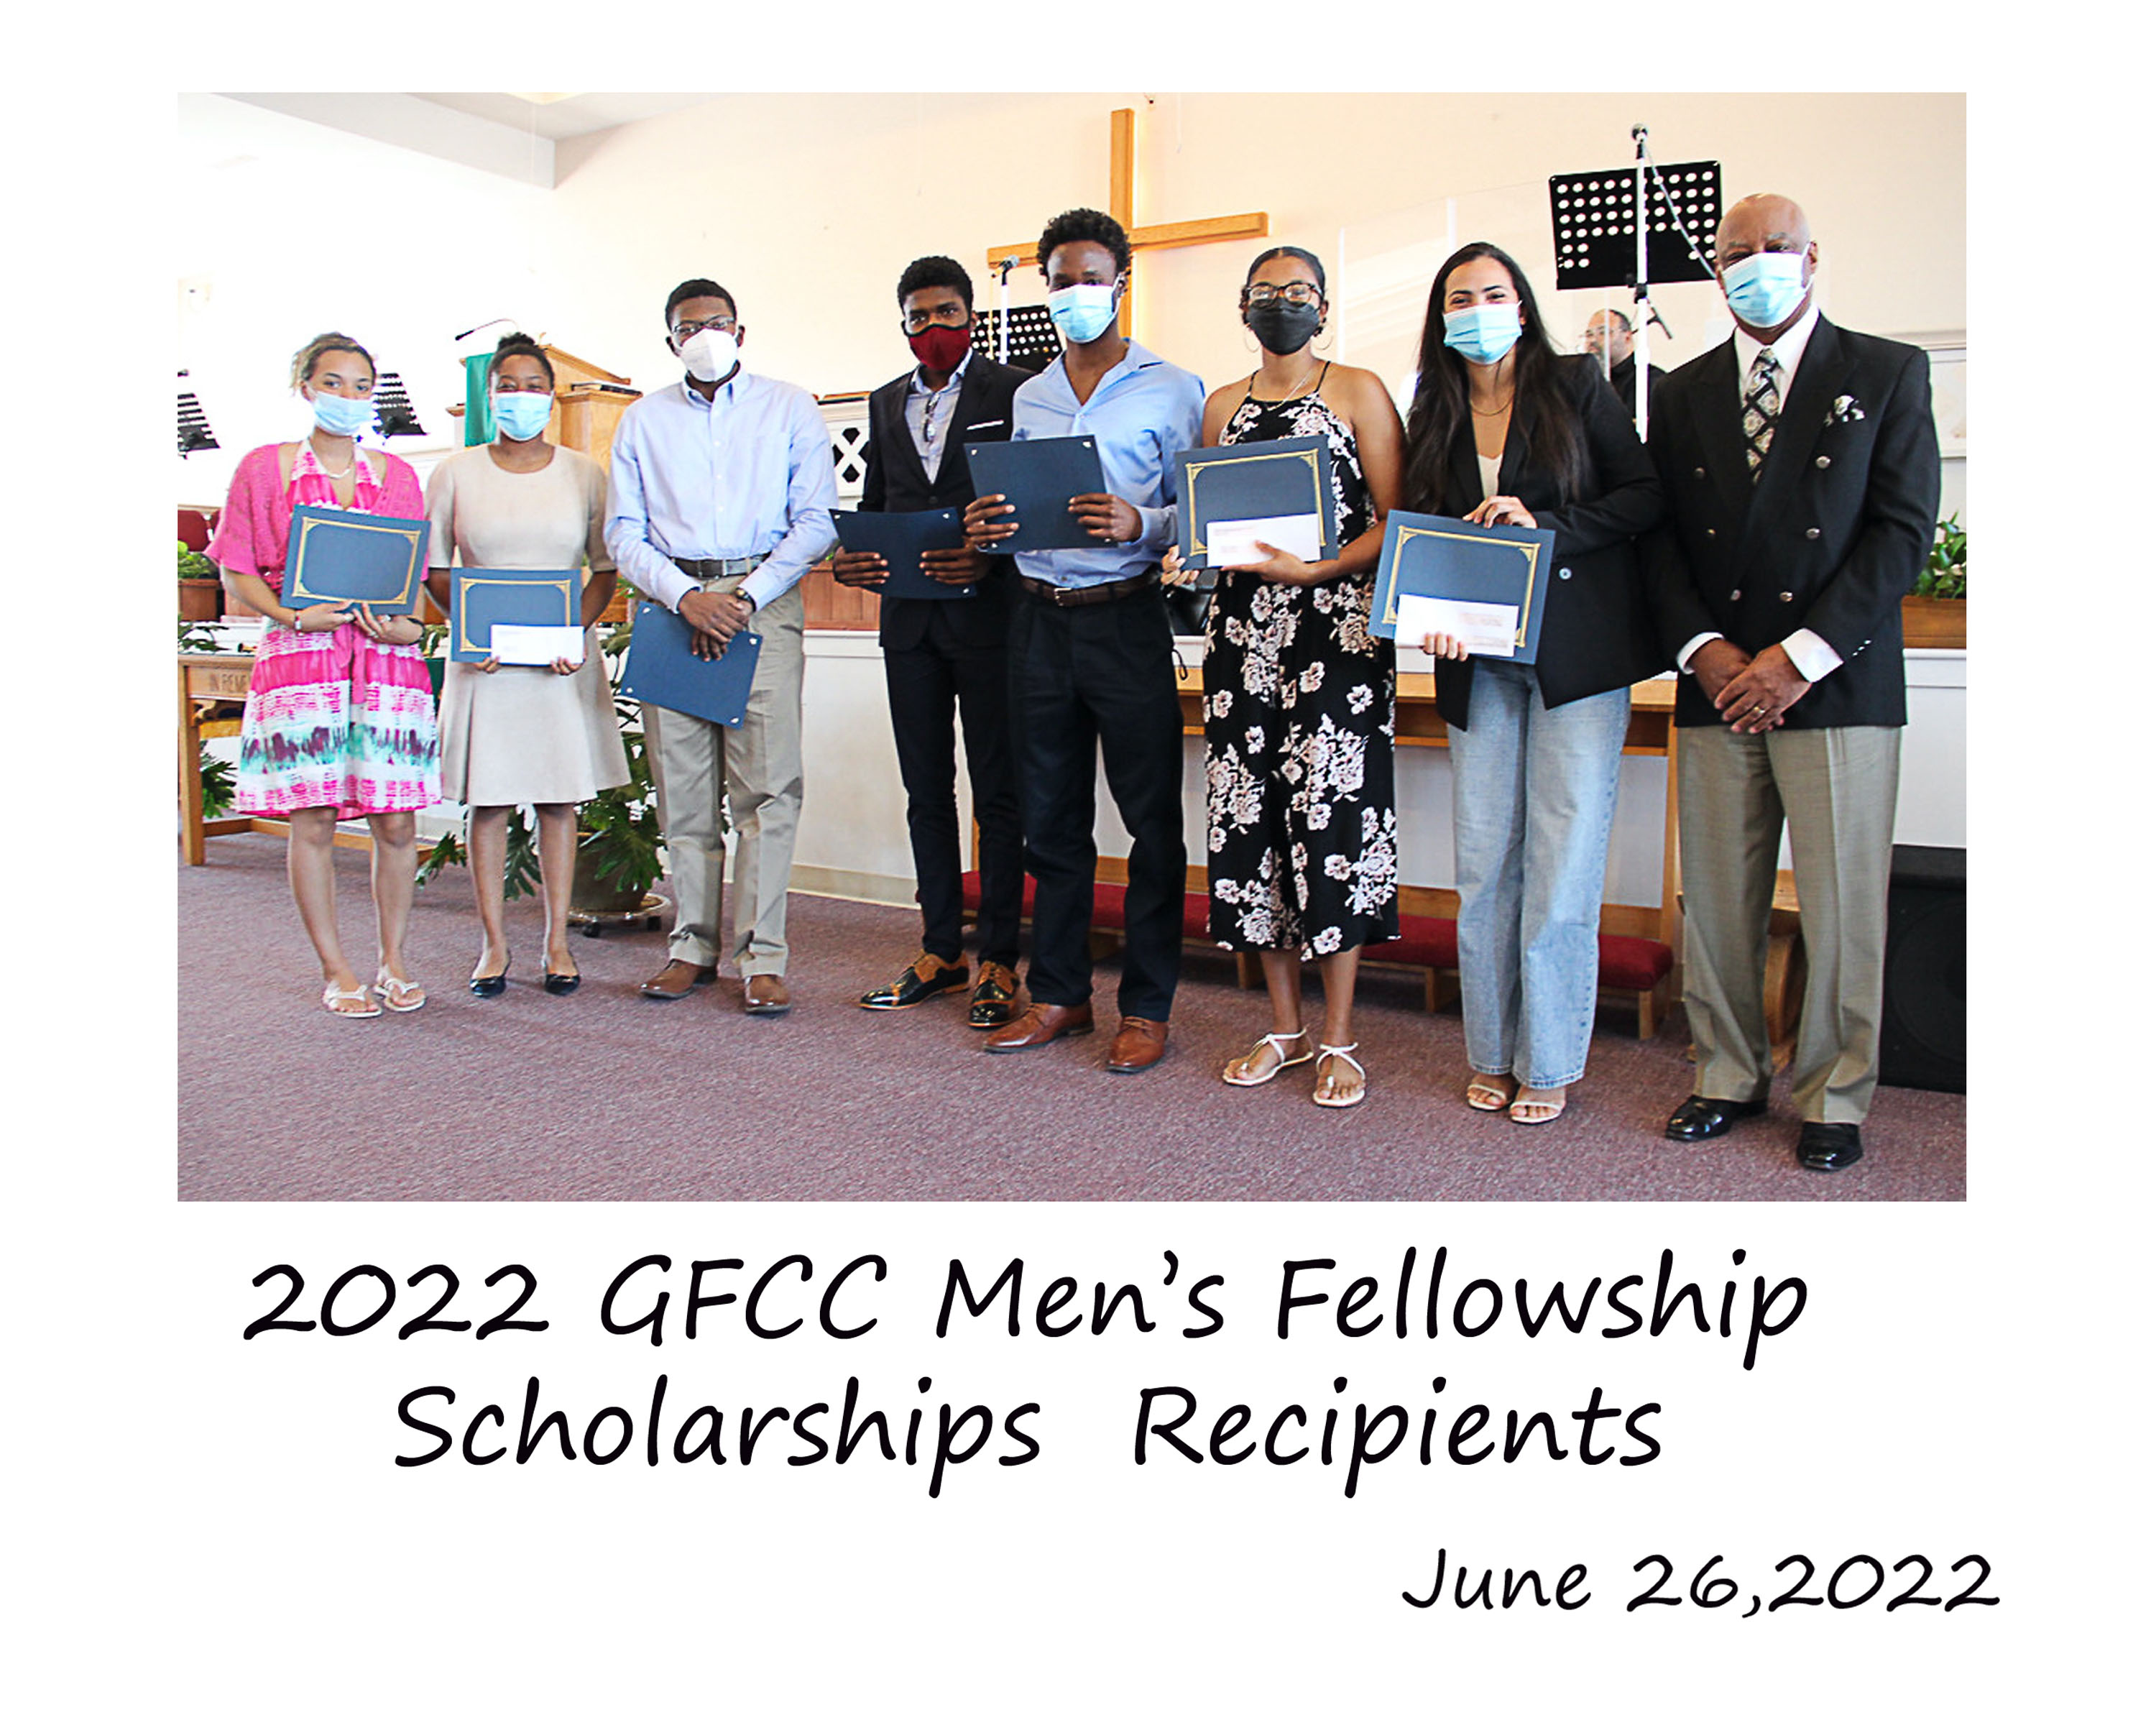 Men's Christian Fellowship's Scholarship recipients